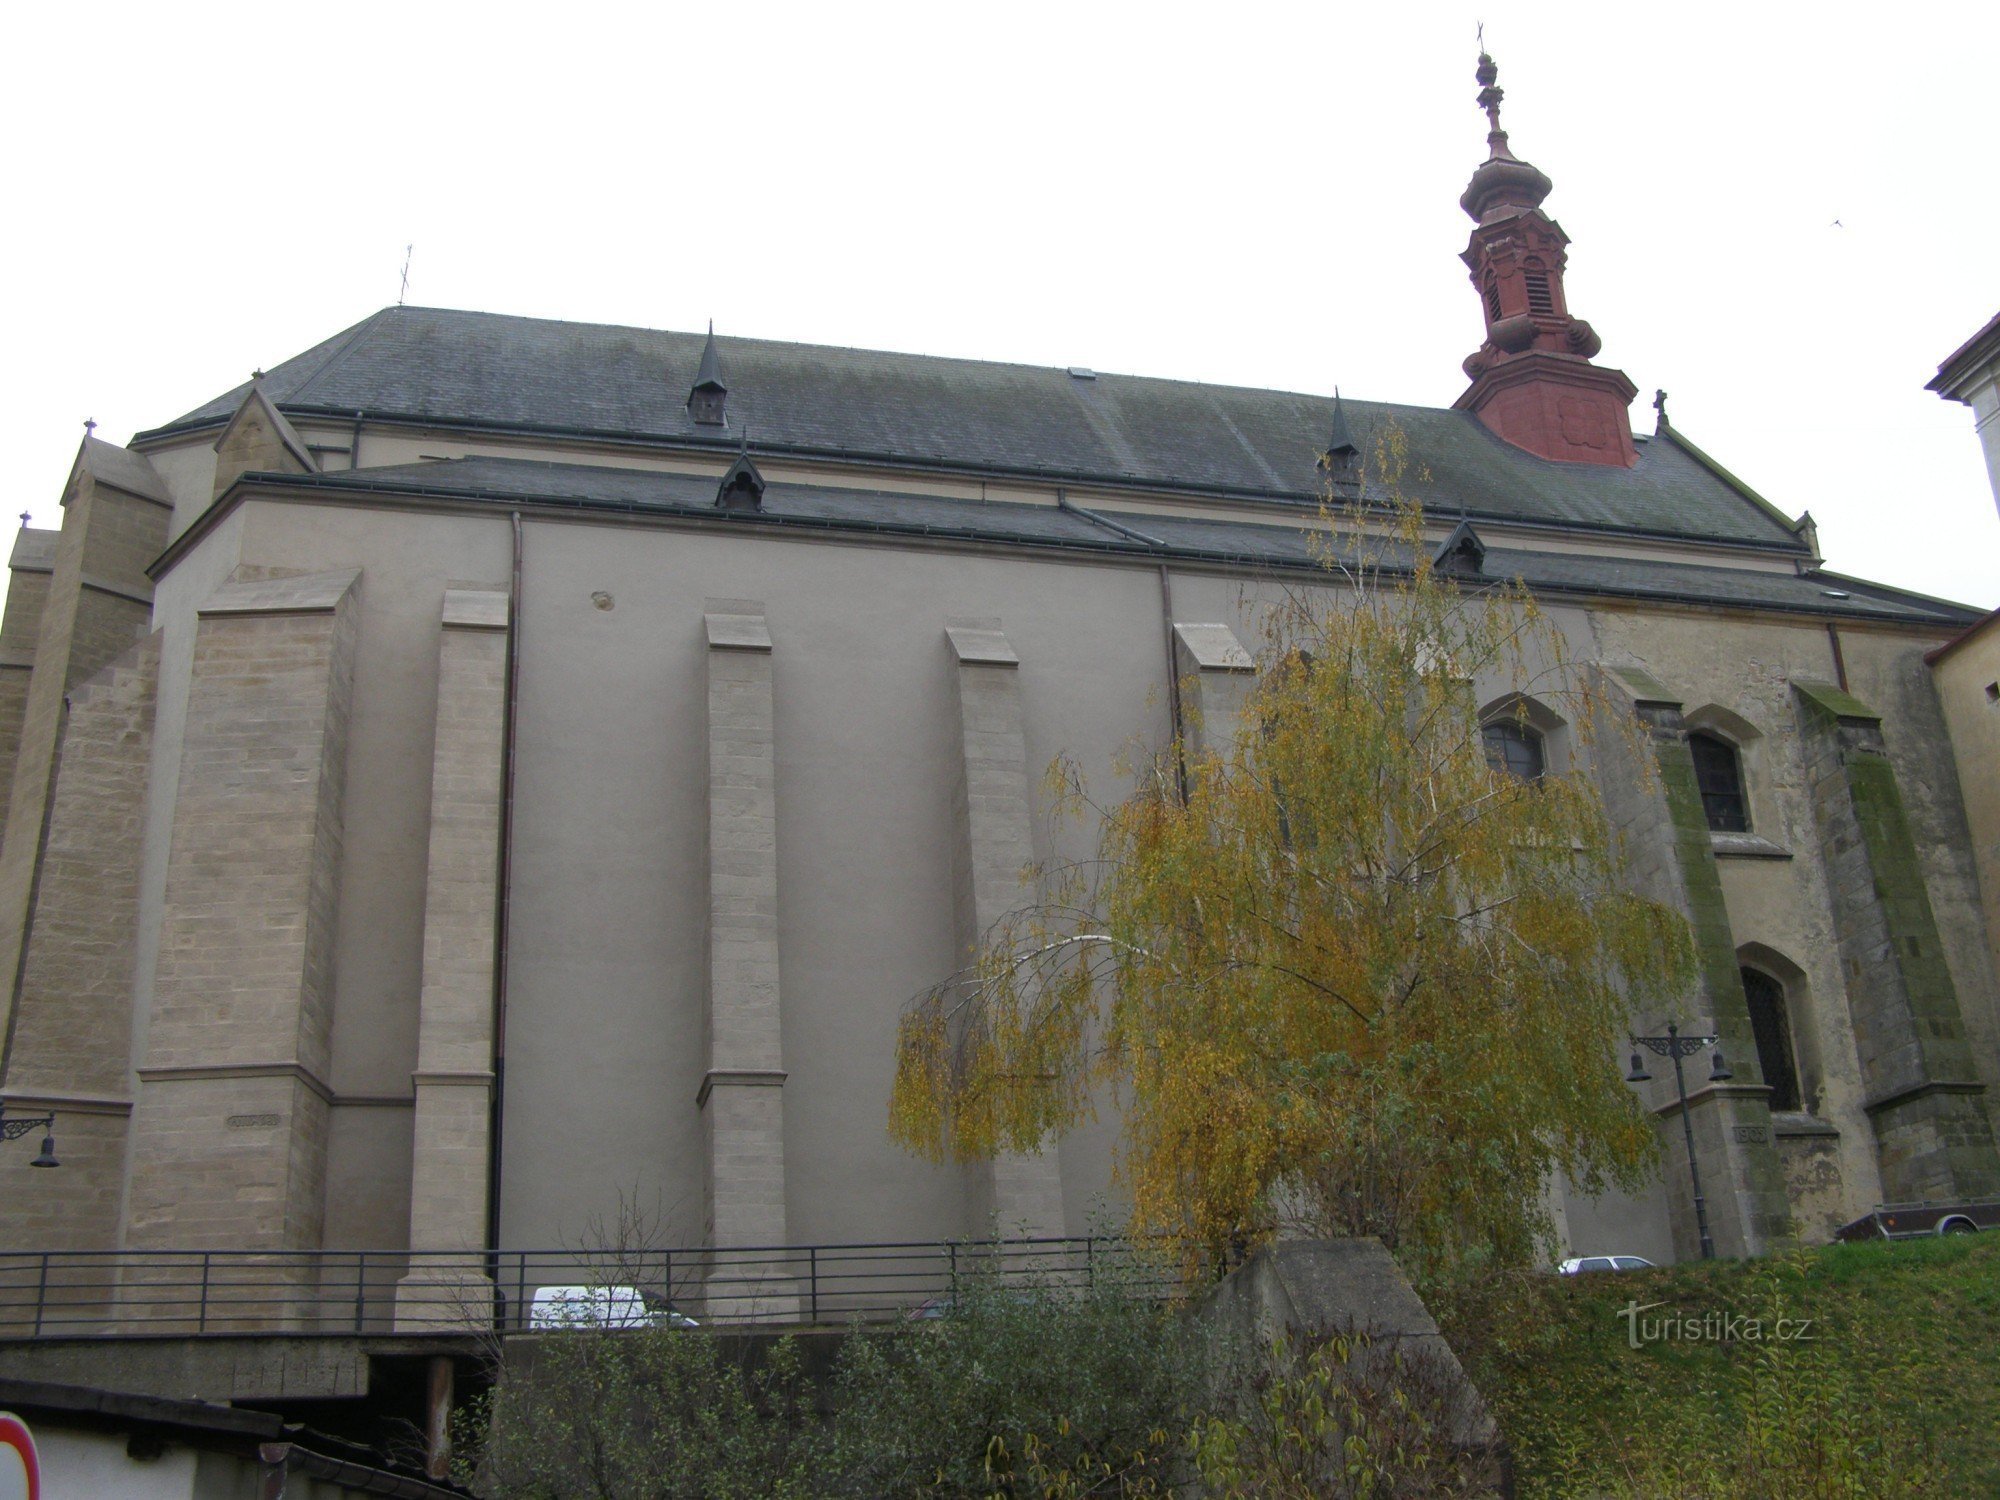 Jaroměř - Pyhän kirkko Nicholas